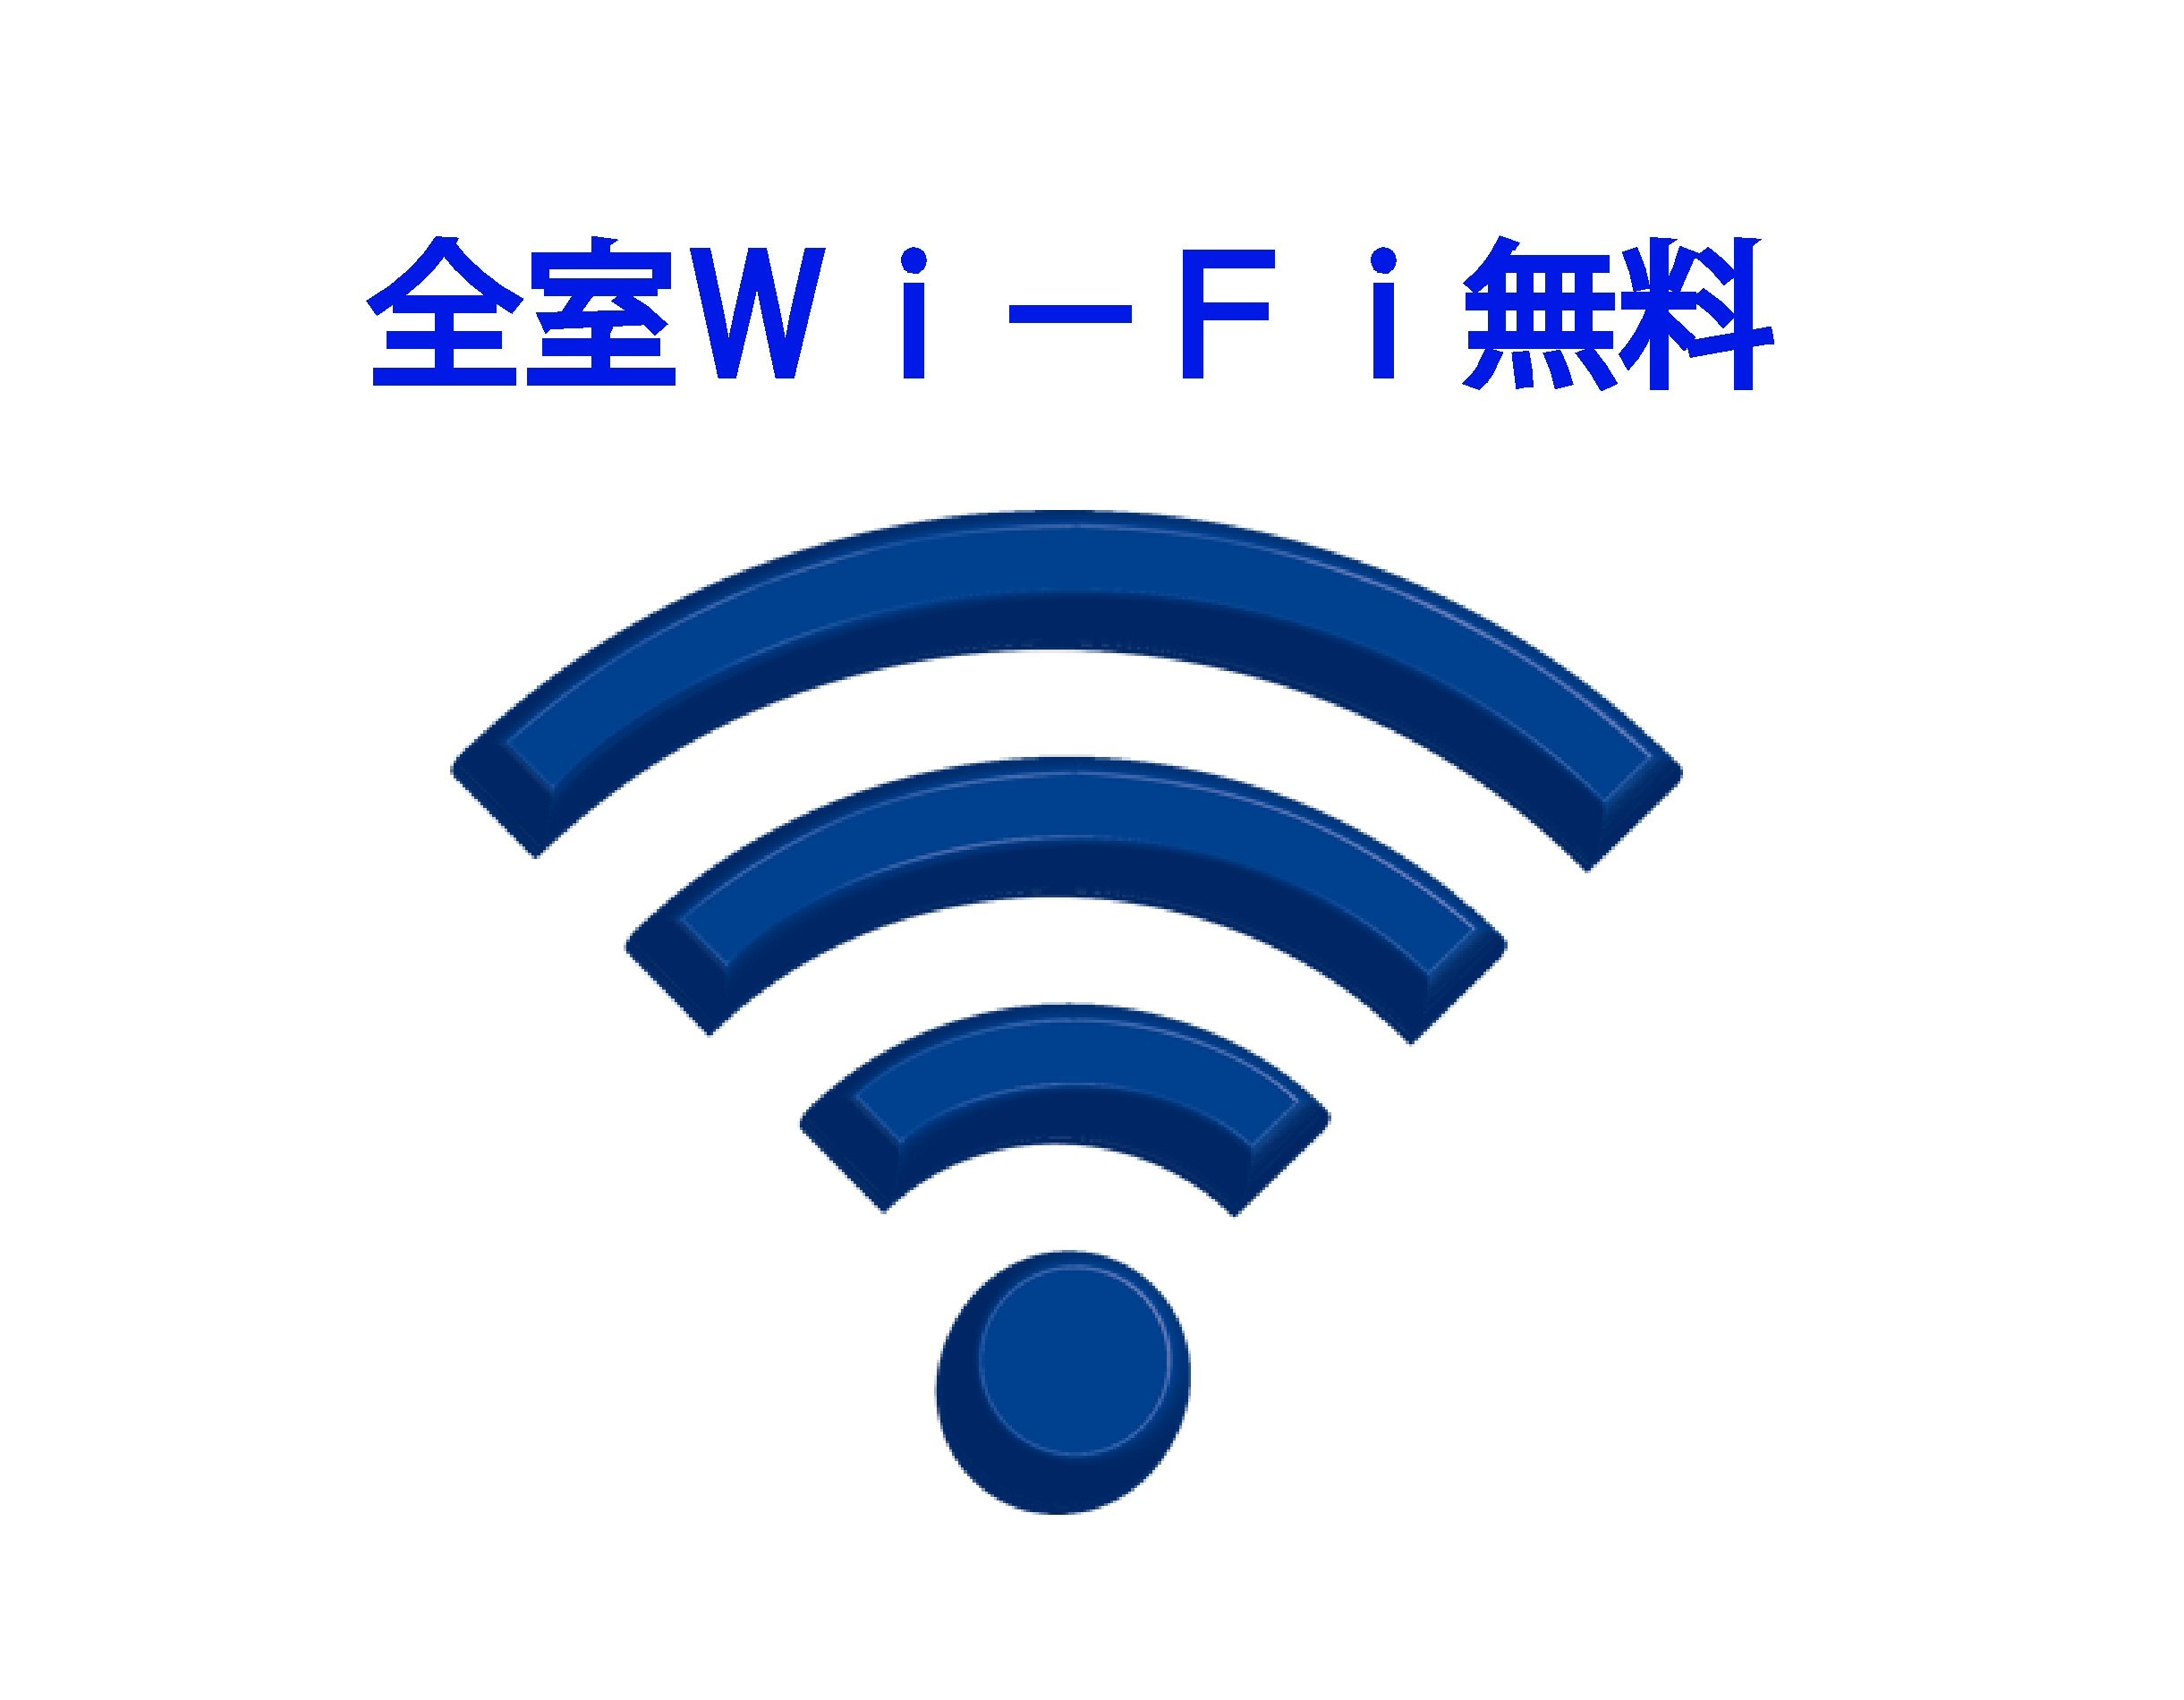 wi-fi 무료